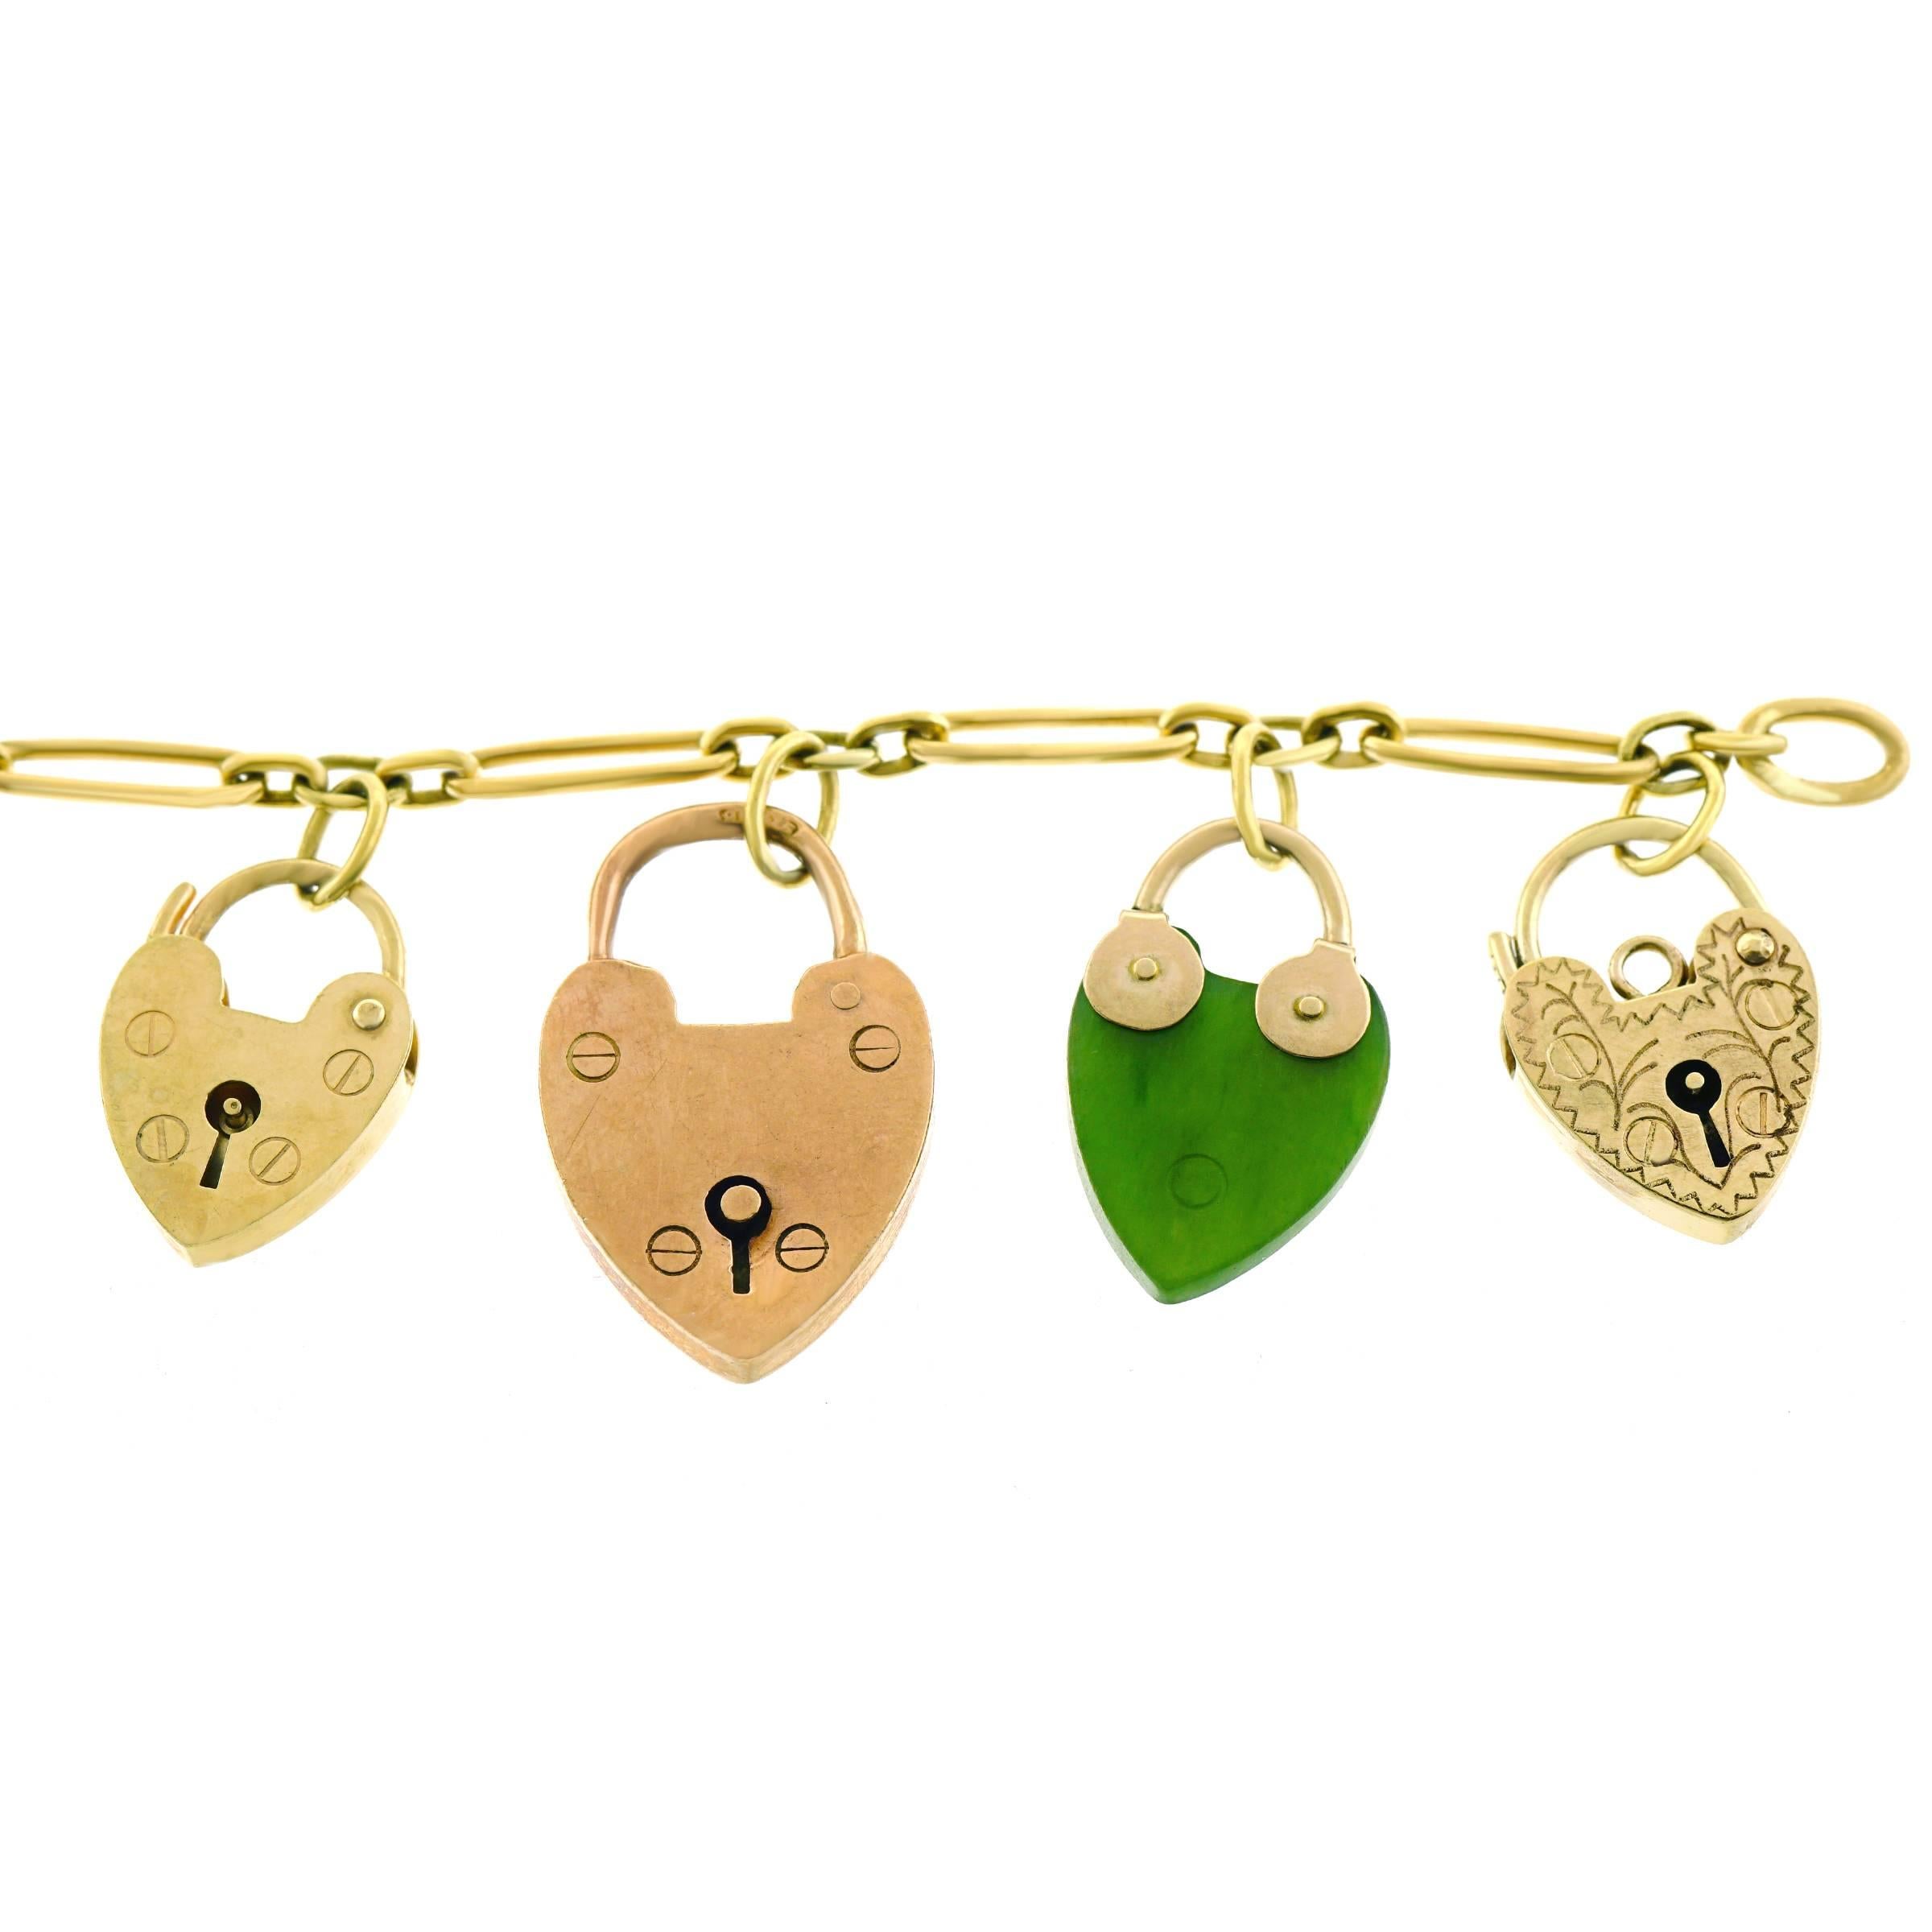 Antique Heart Locks and Keys Gold Charm Bracelet 1